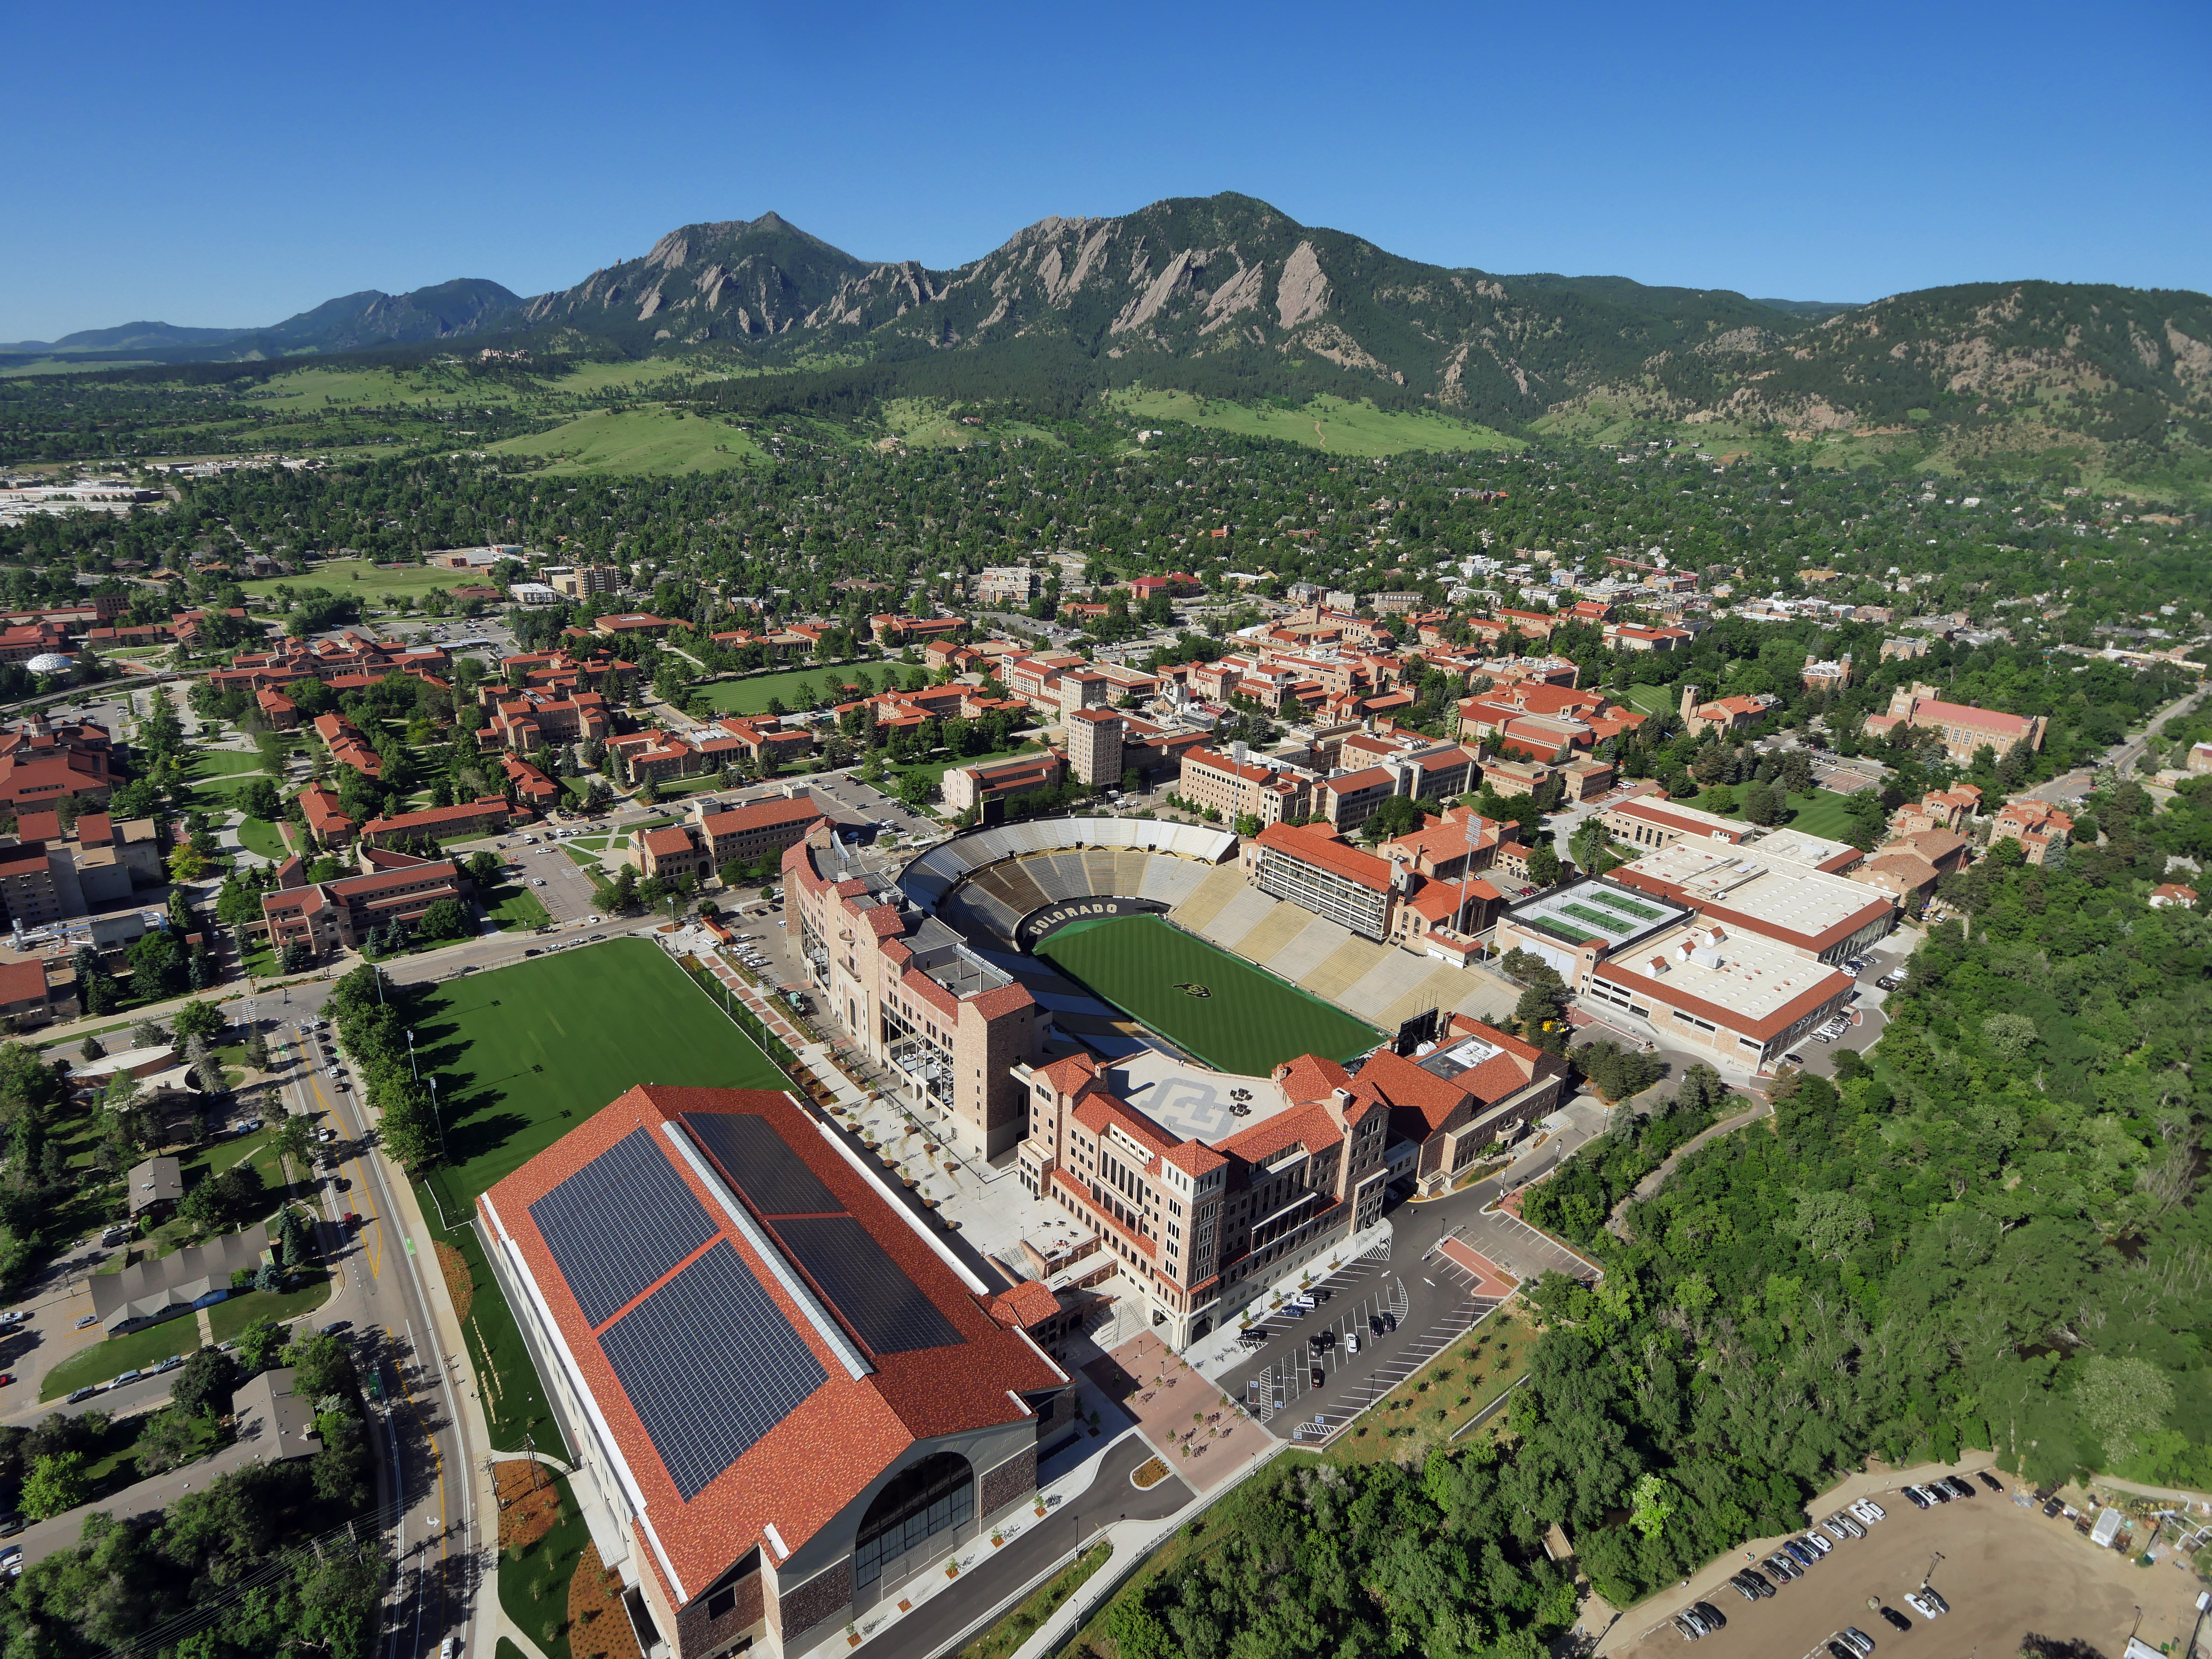 University of Colorado - Most beautiful US universities